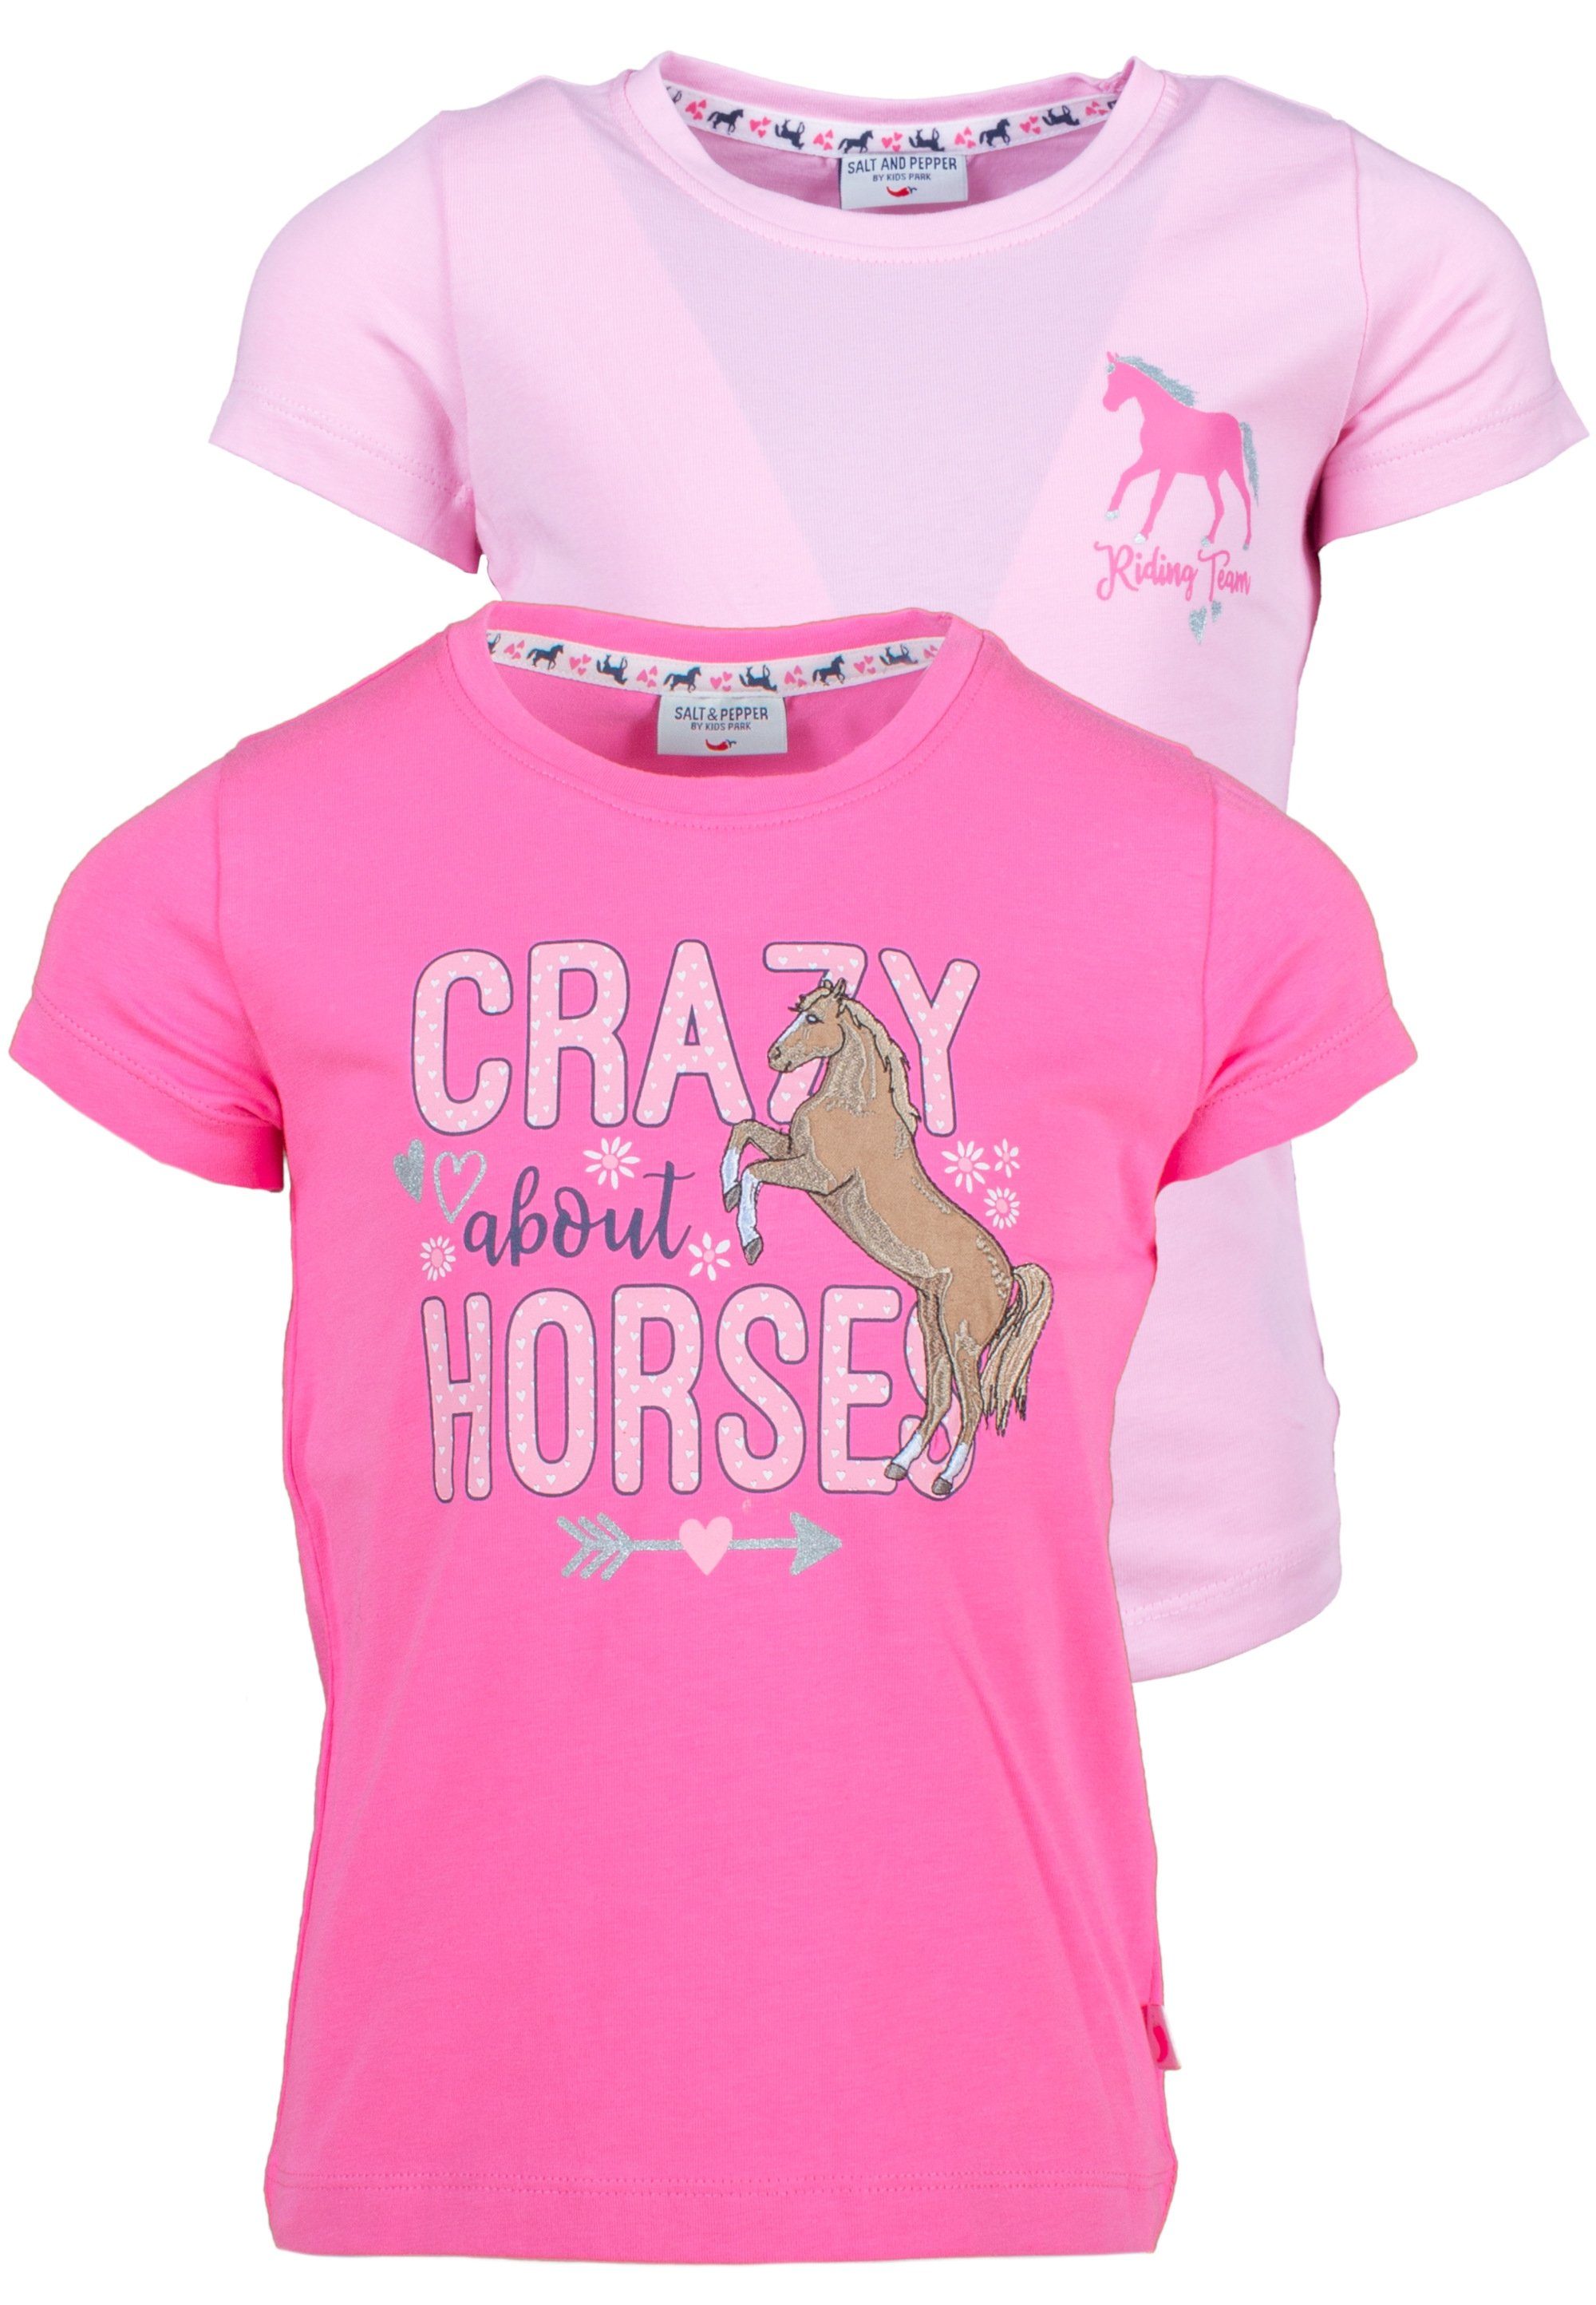 SALT AND Horses Pferde-Motiven (2-tlg) T-Shirt rosa pink, PEPPER Crazy schönen mit